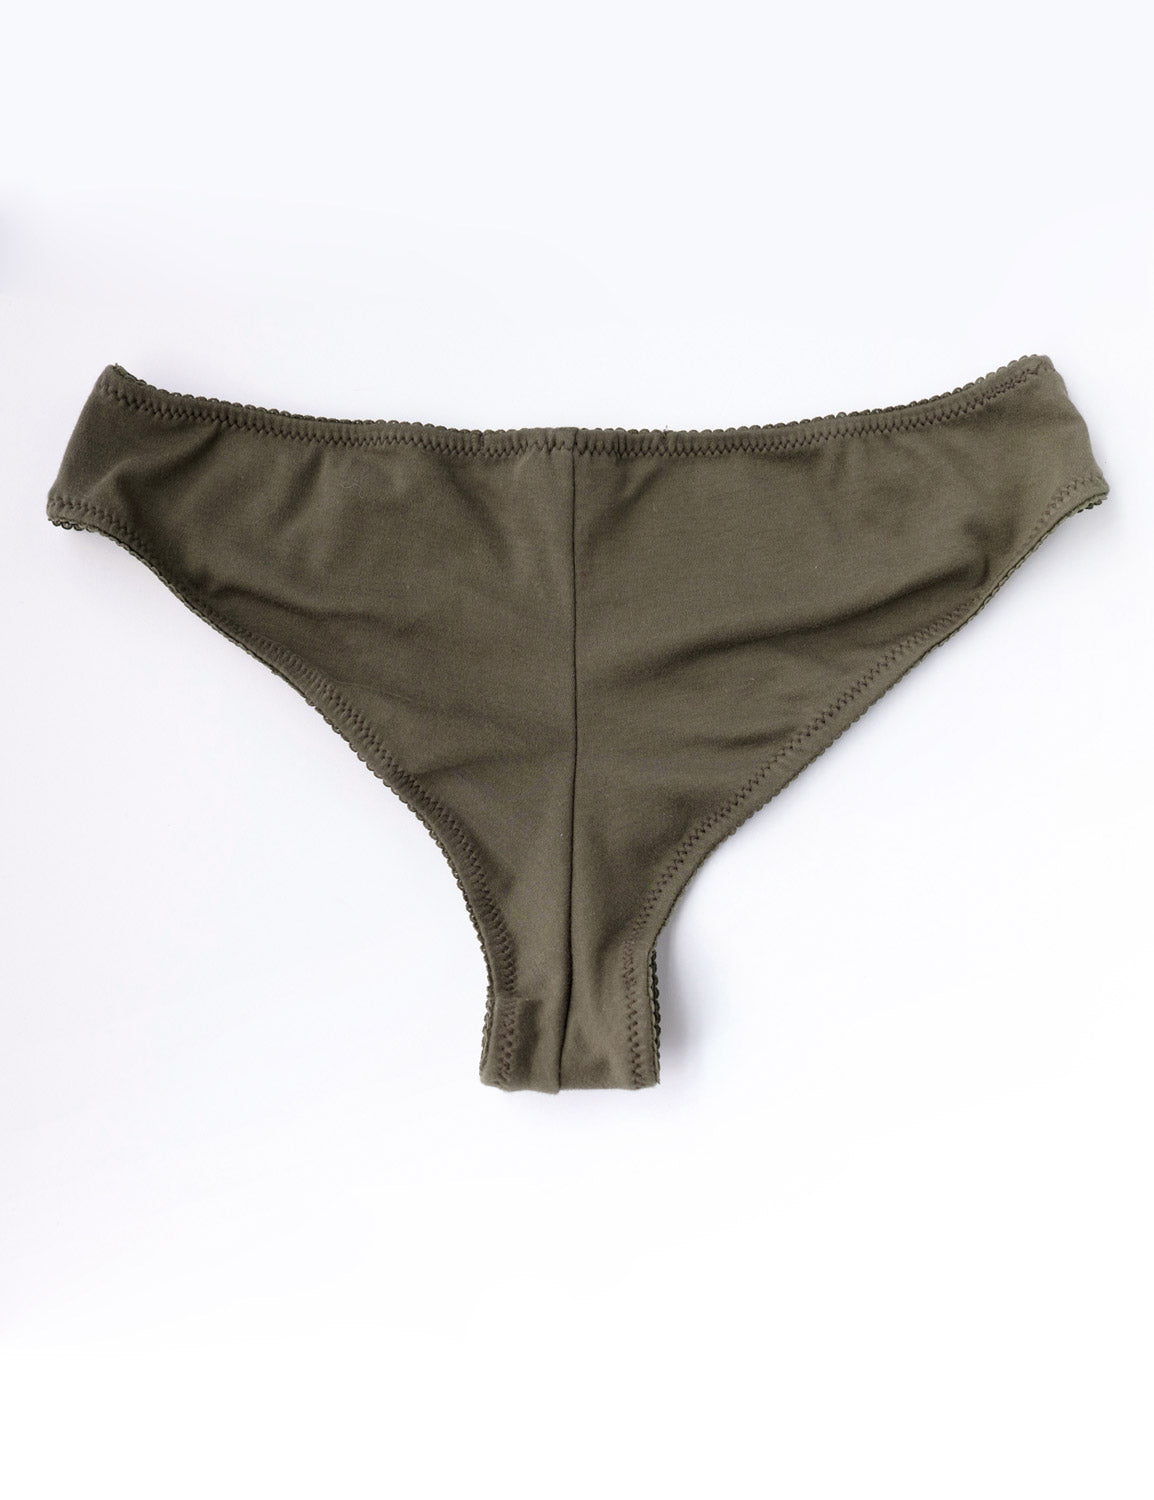 Cheeky organic cotton underwear - Rust – THE GREAT UNDRESSED